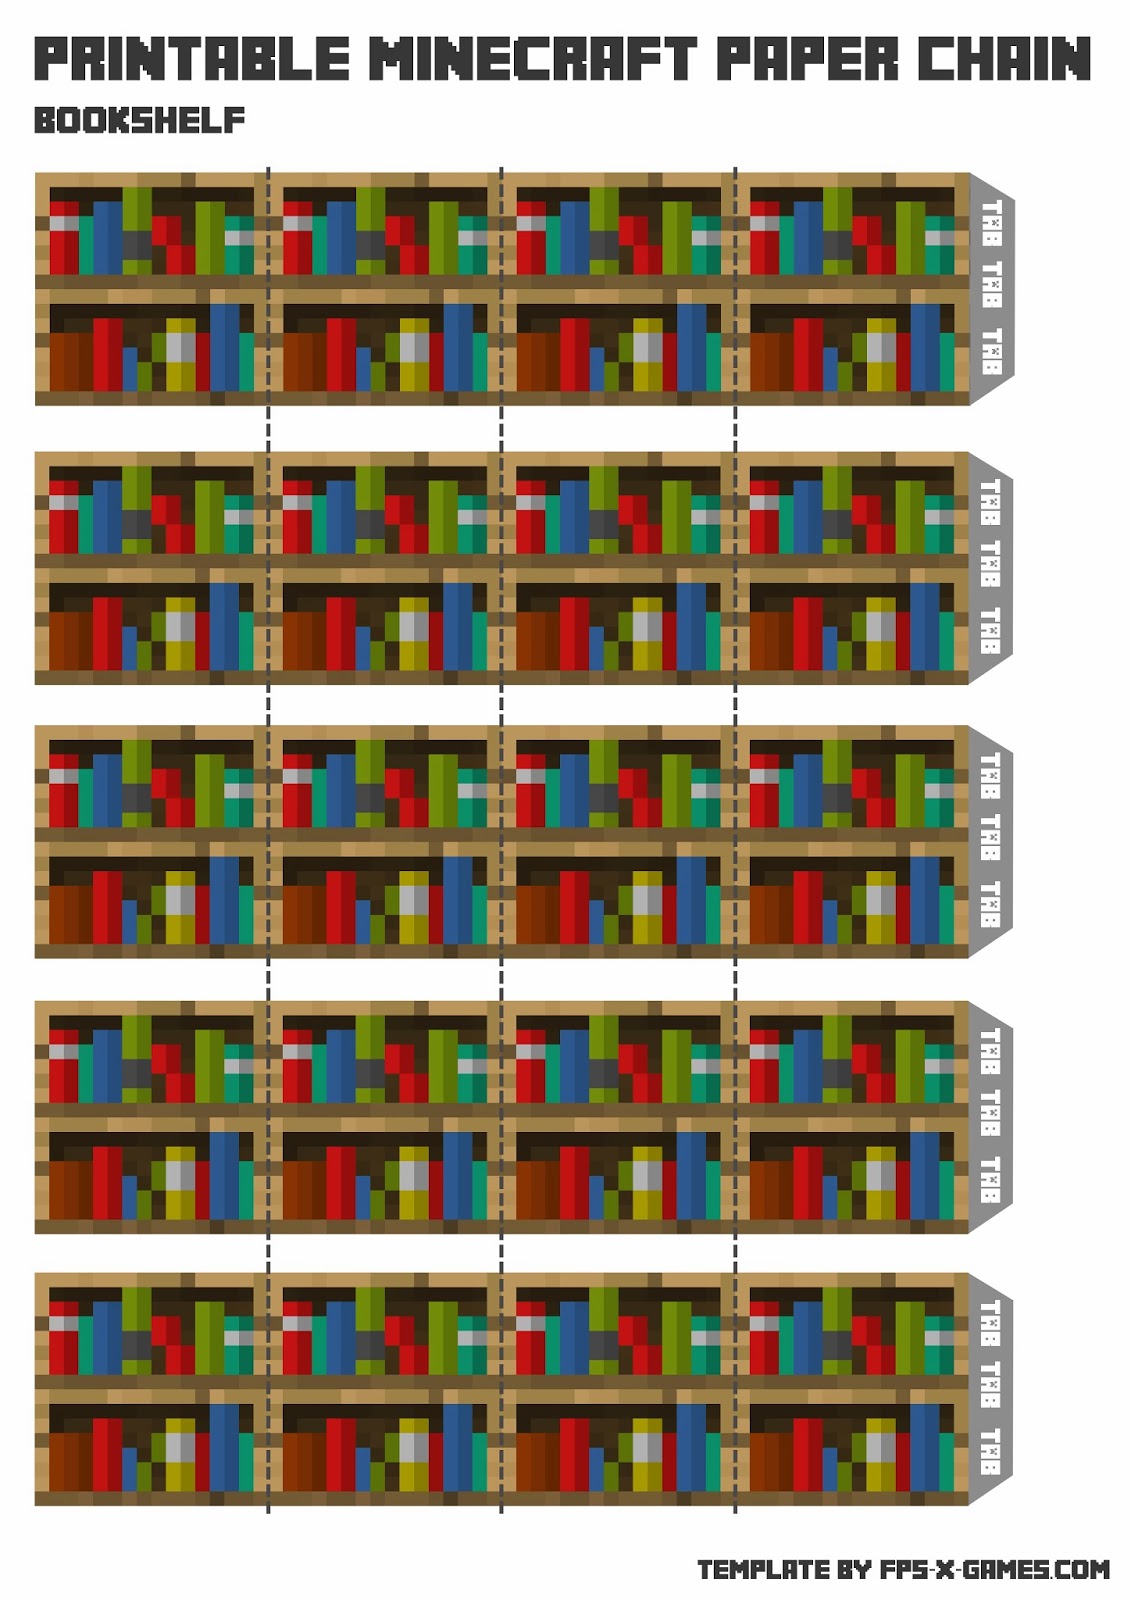 Papercraft Minecraft Paper Chain - Bookshelf